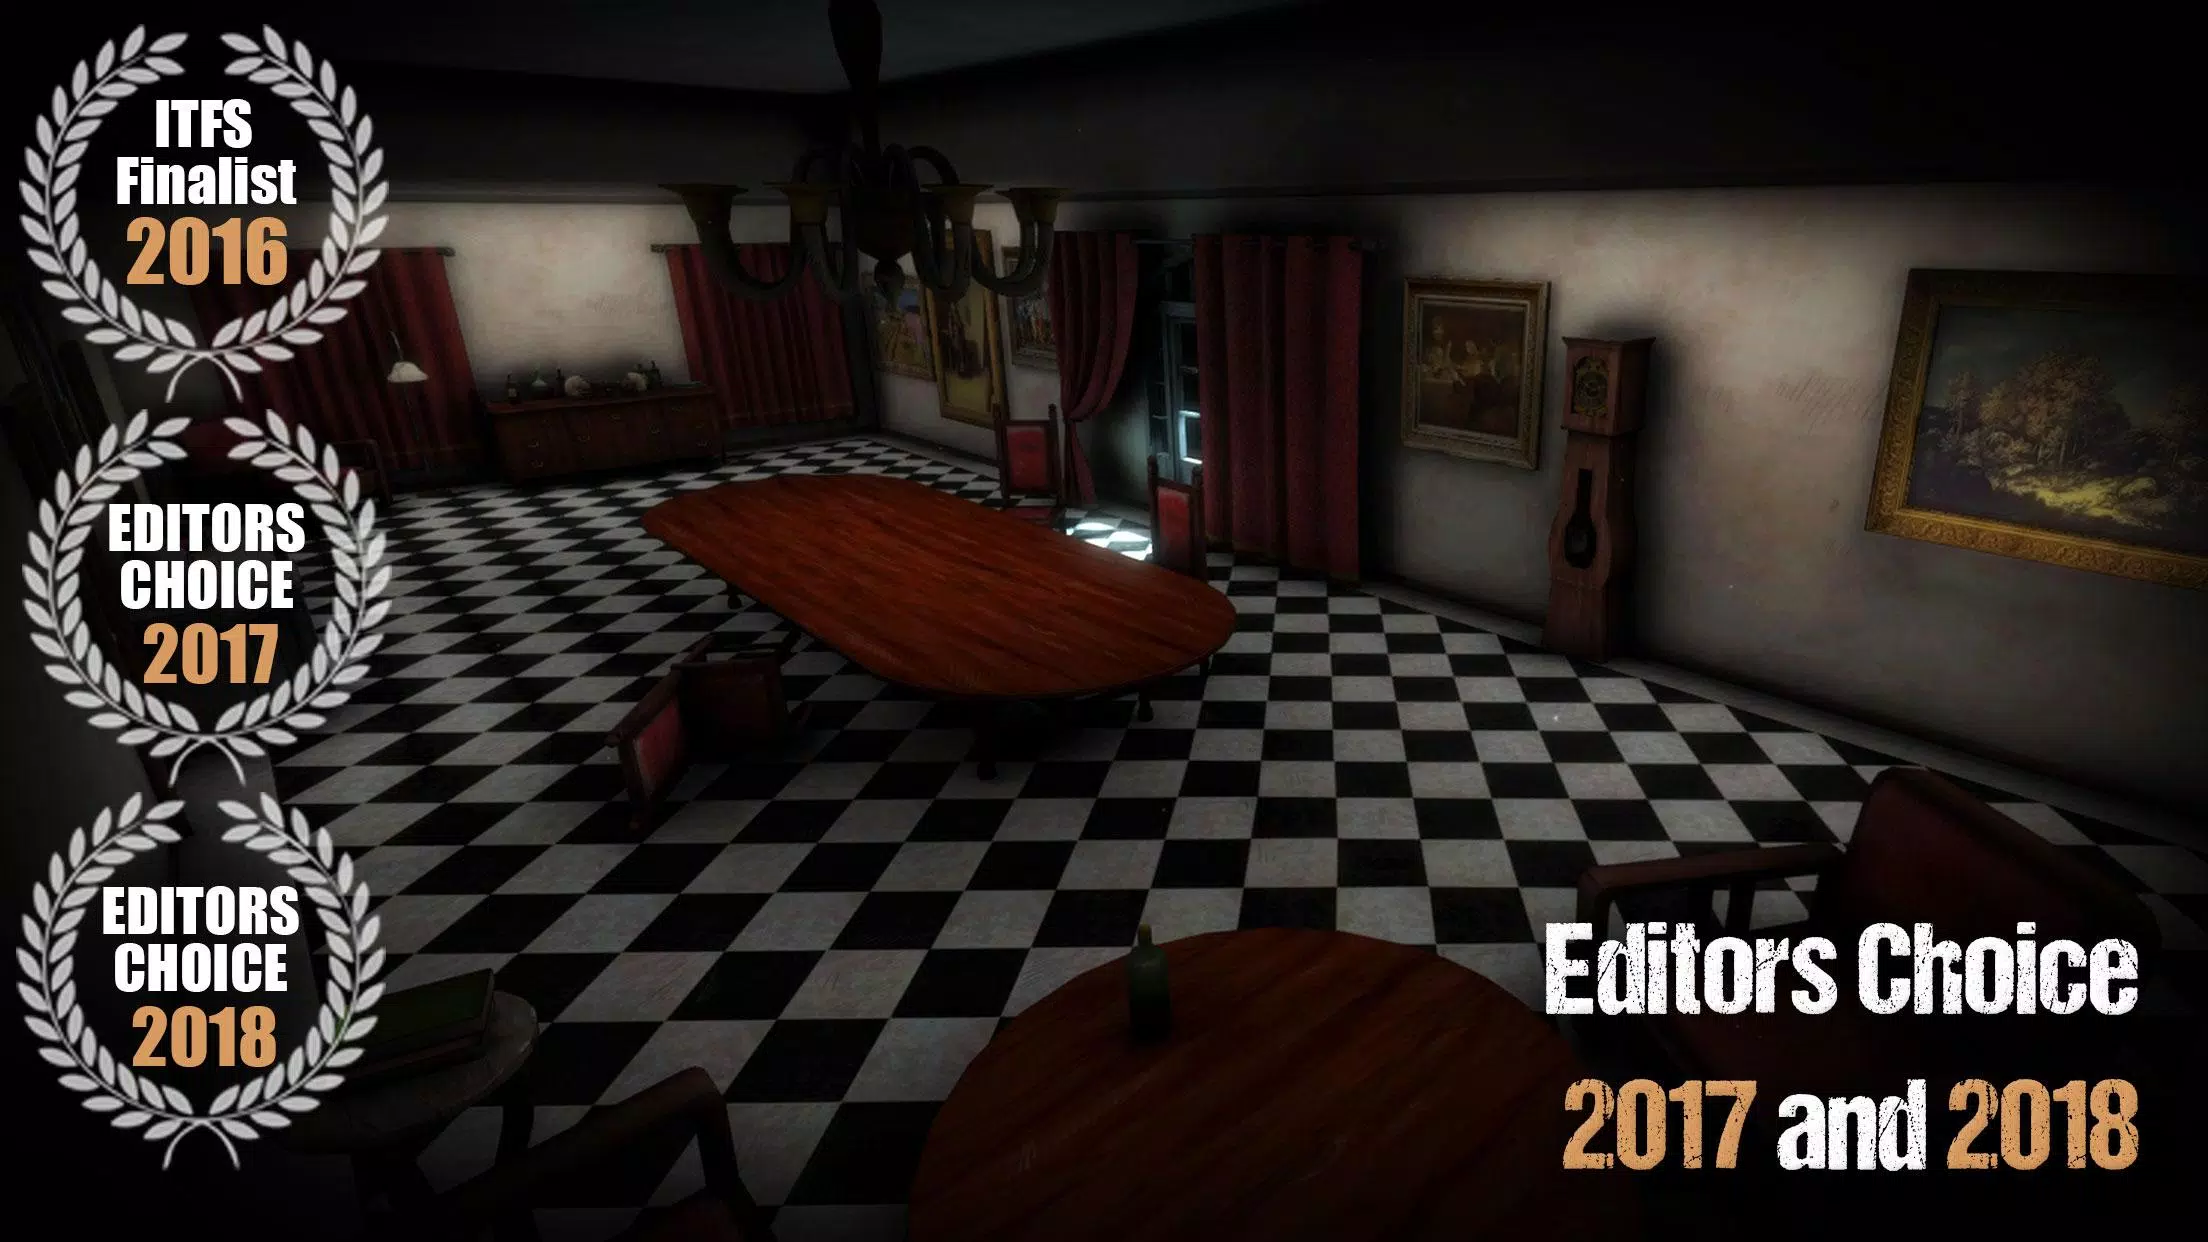 Sinister Edge: 3D Horror Game · Gameplay Walkthrough Part 1 (iOS